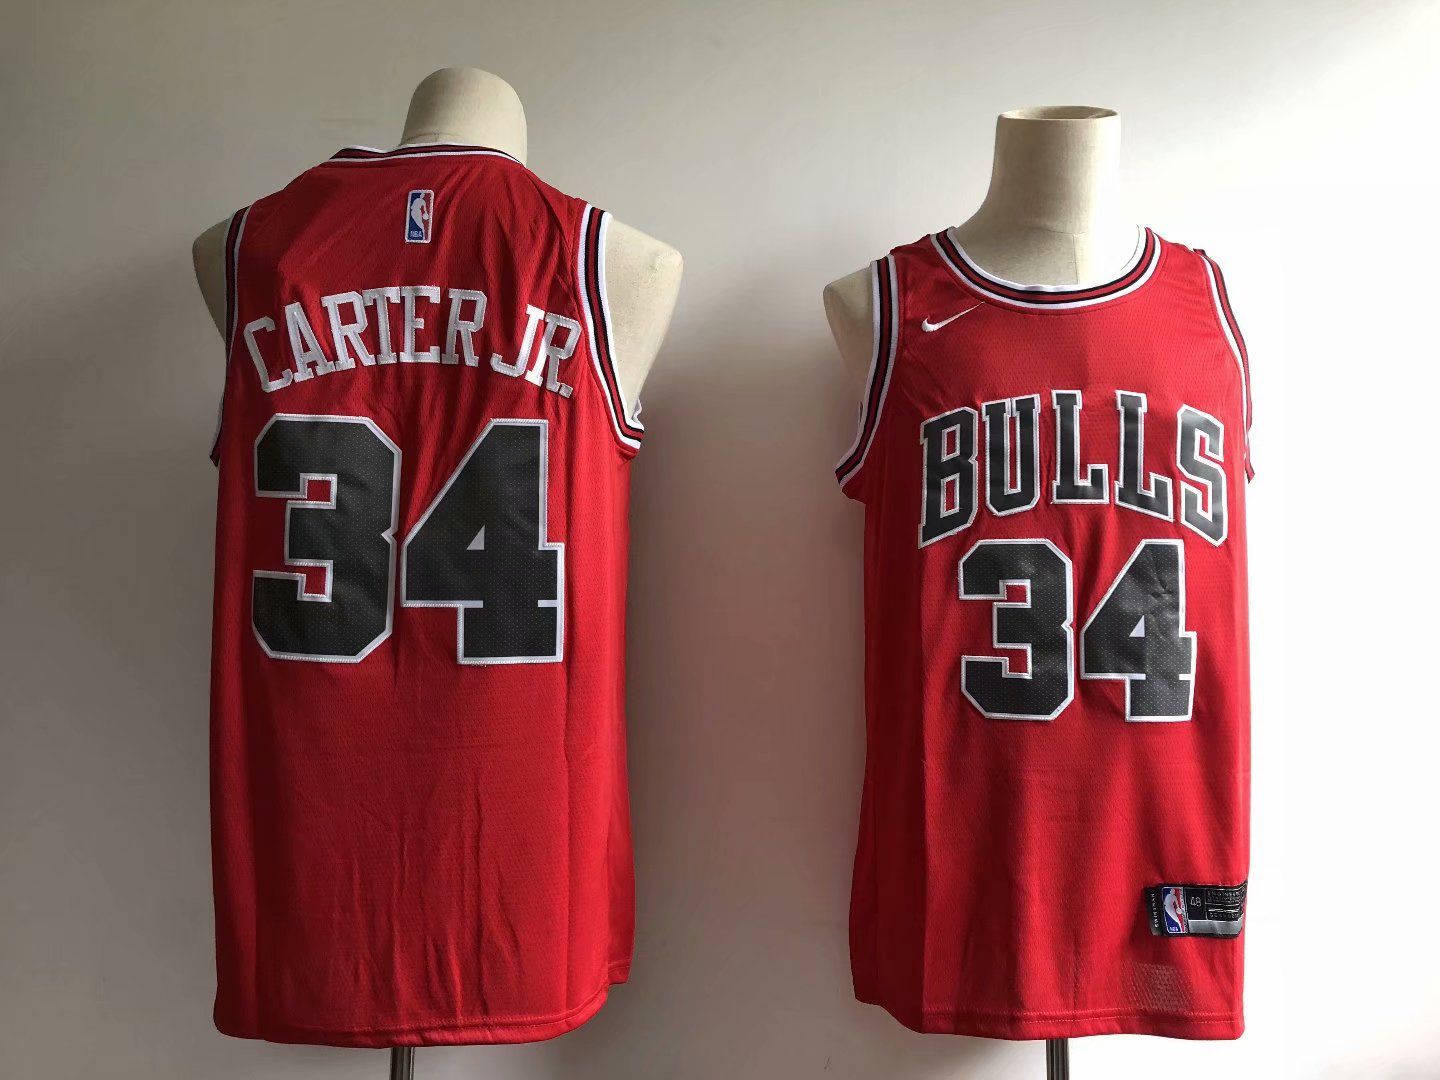 Men Chicago Bulls #34 Carter jr Red Game Nike NBA Jerseys